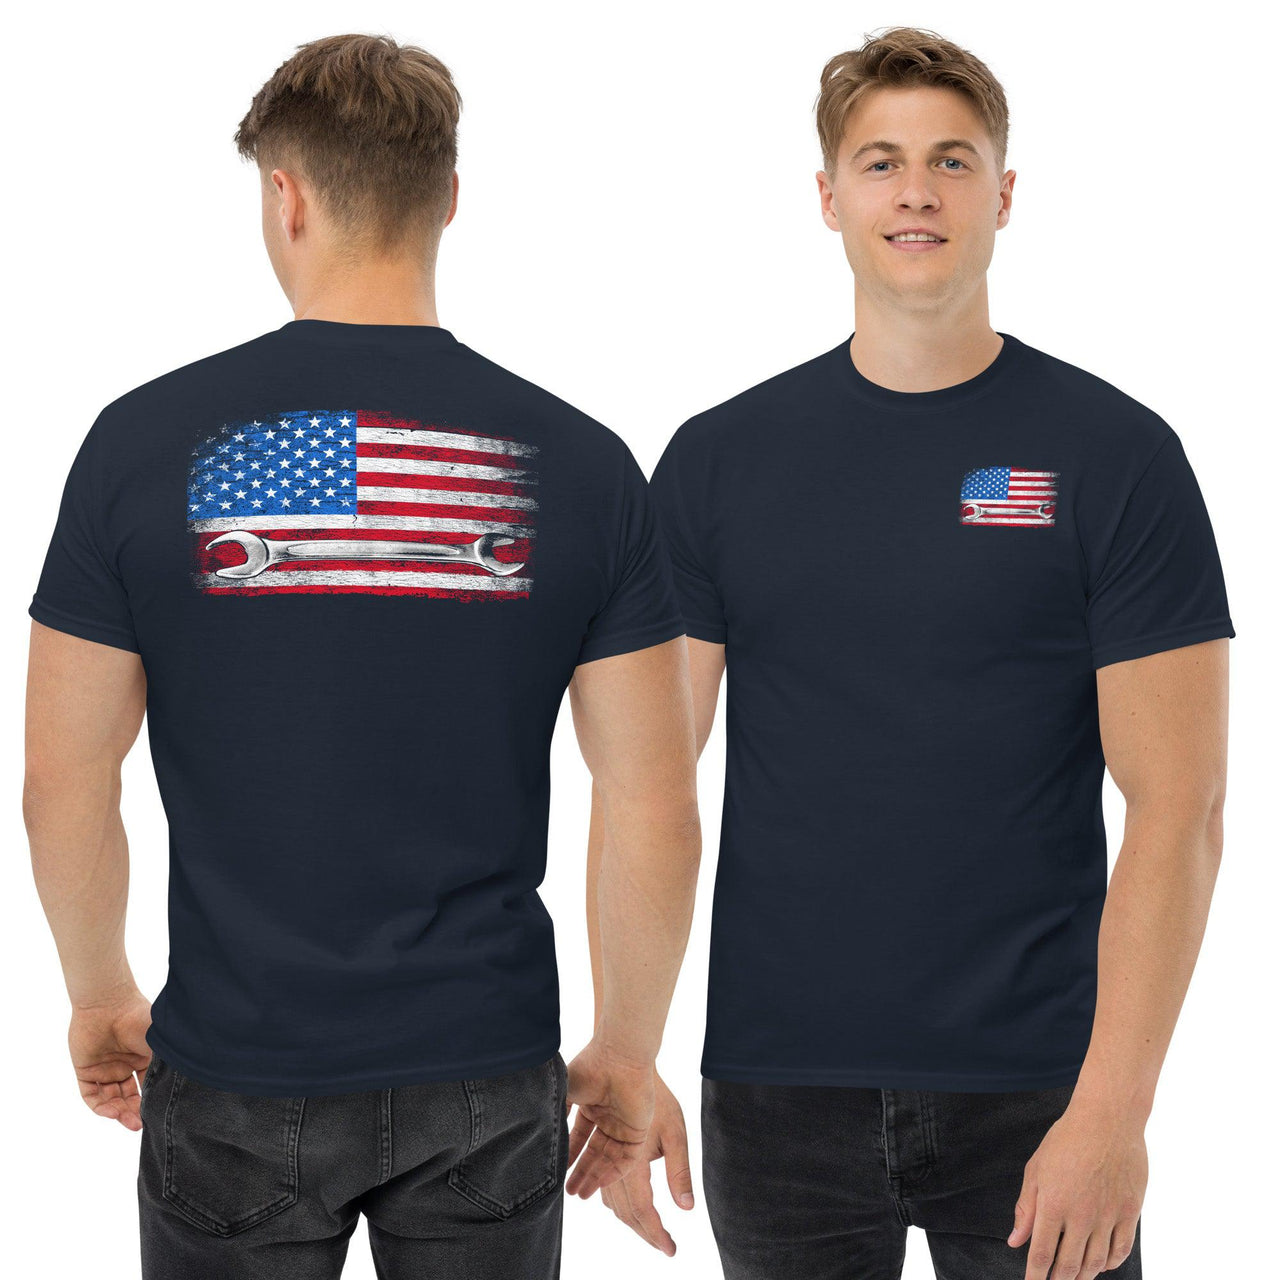 Mechanic T-Shirt American Flag Wrench Design modeled in navy